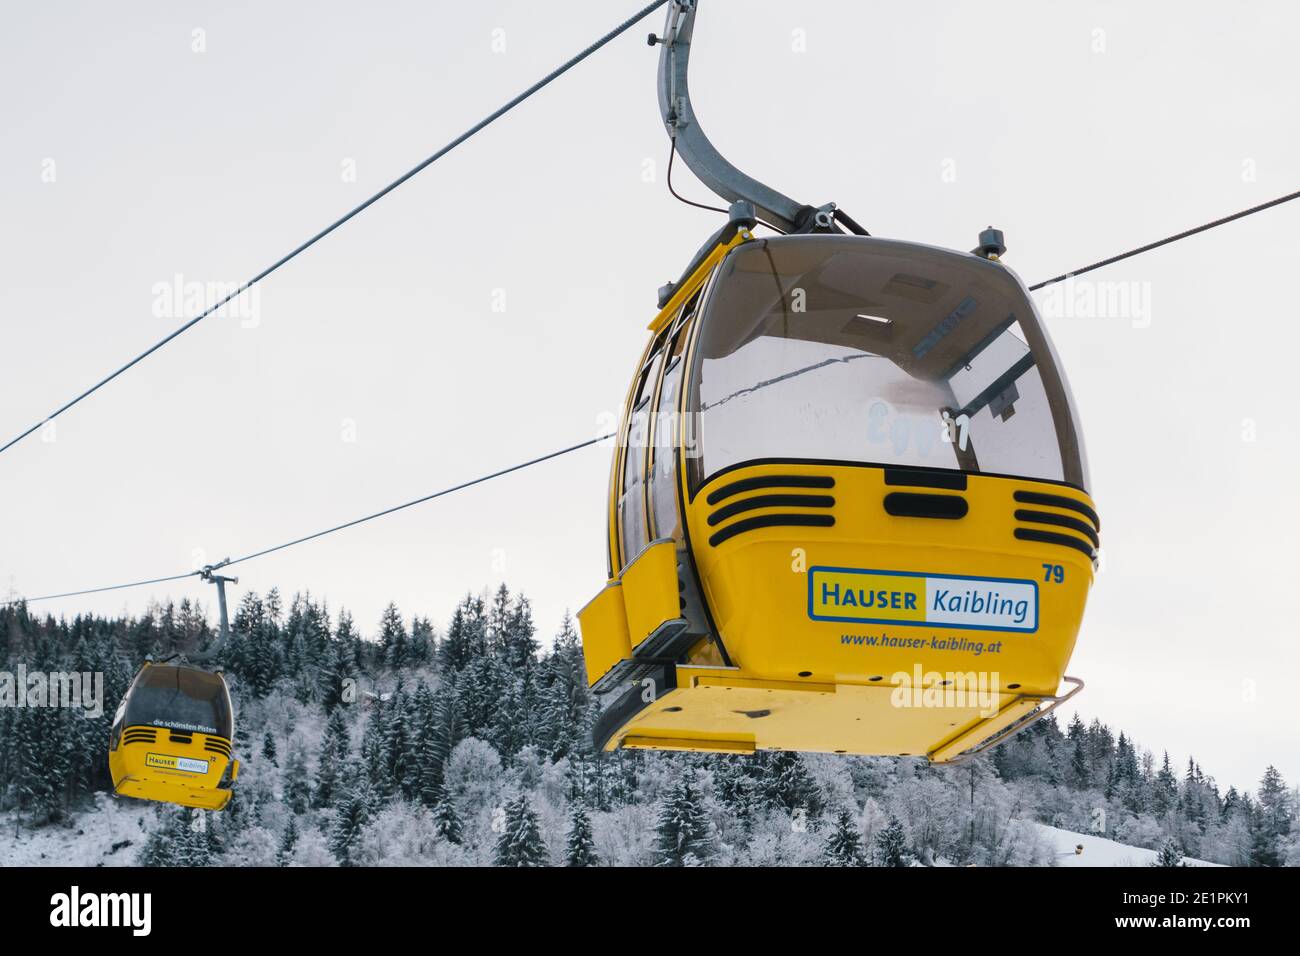 Haus im Ennstal, Austria - December 29 2020: Hauser Kaibling Yellow Lift 8 Seater Gondola with Logo in Winter. Stock Photo